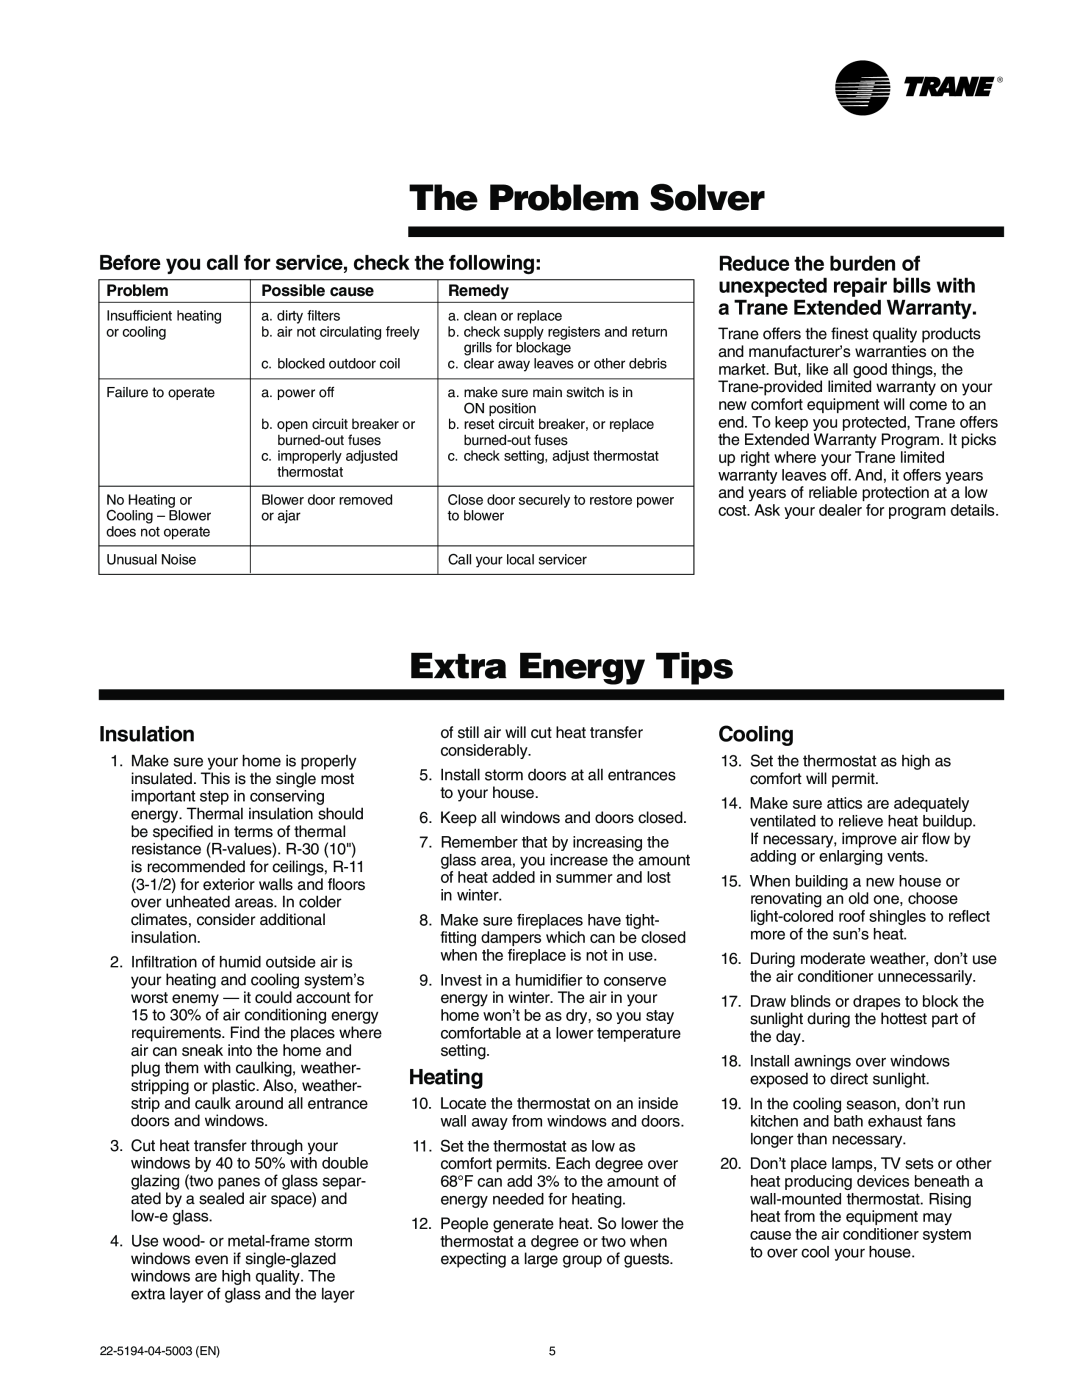 Trane 4TTX6, 4TTX4, 2TTX4, 2TTZ9, 4TTX3 manual The Problem Solver, Extra Energy Tips, Insulation, Heating, Cooling 